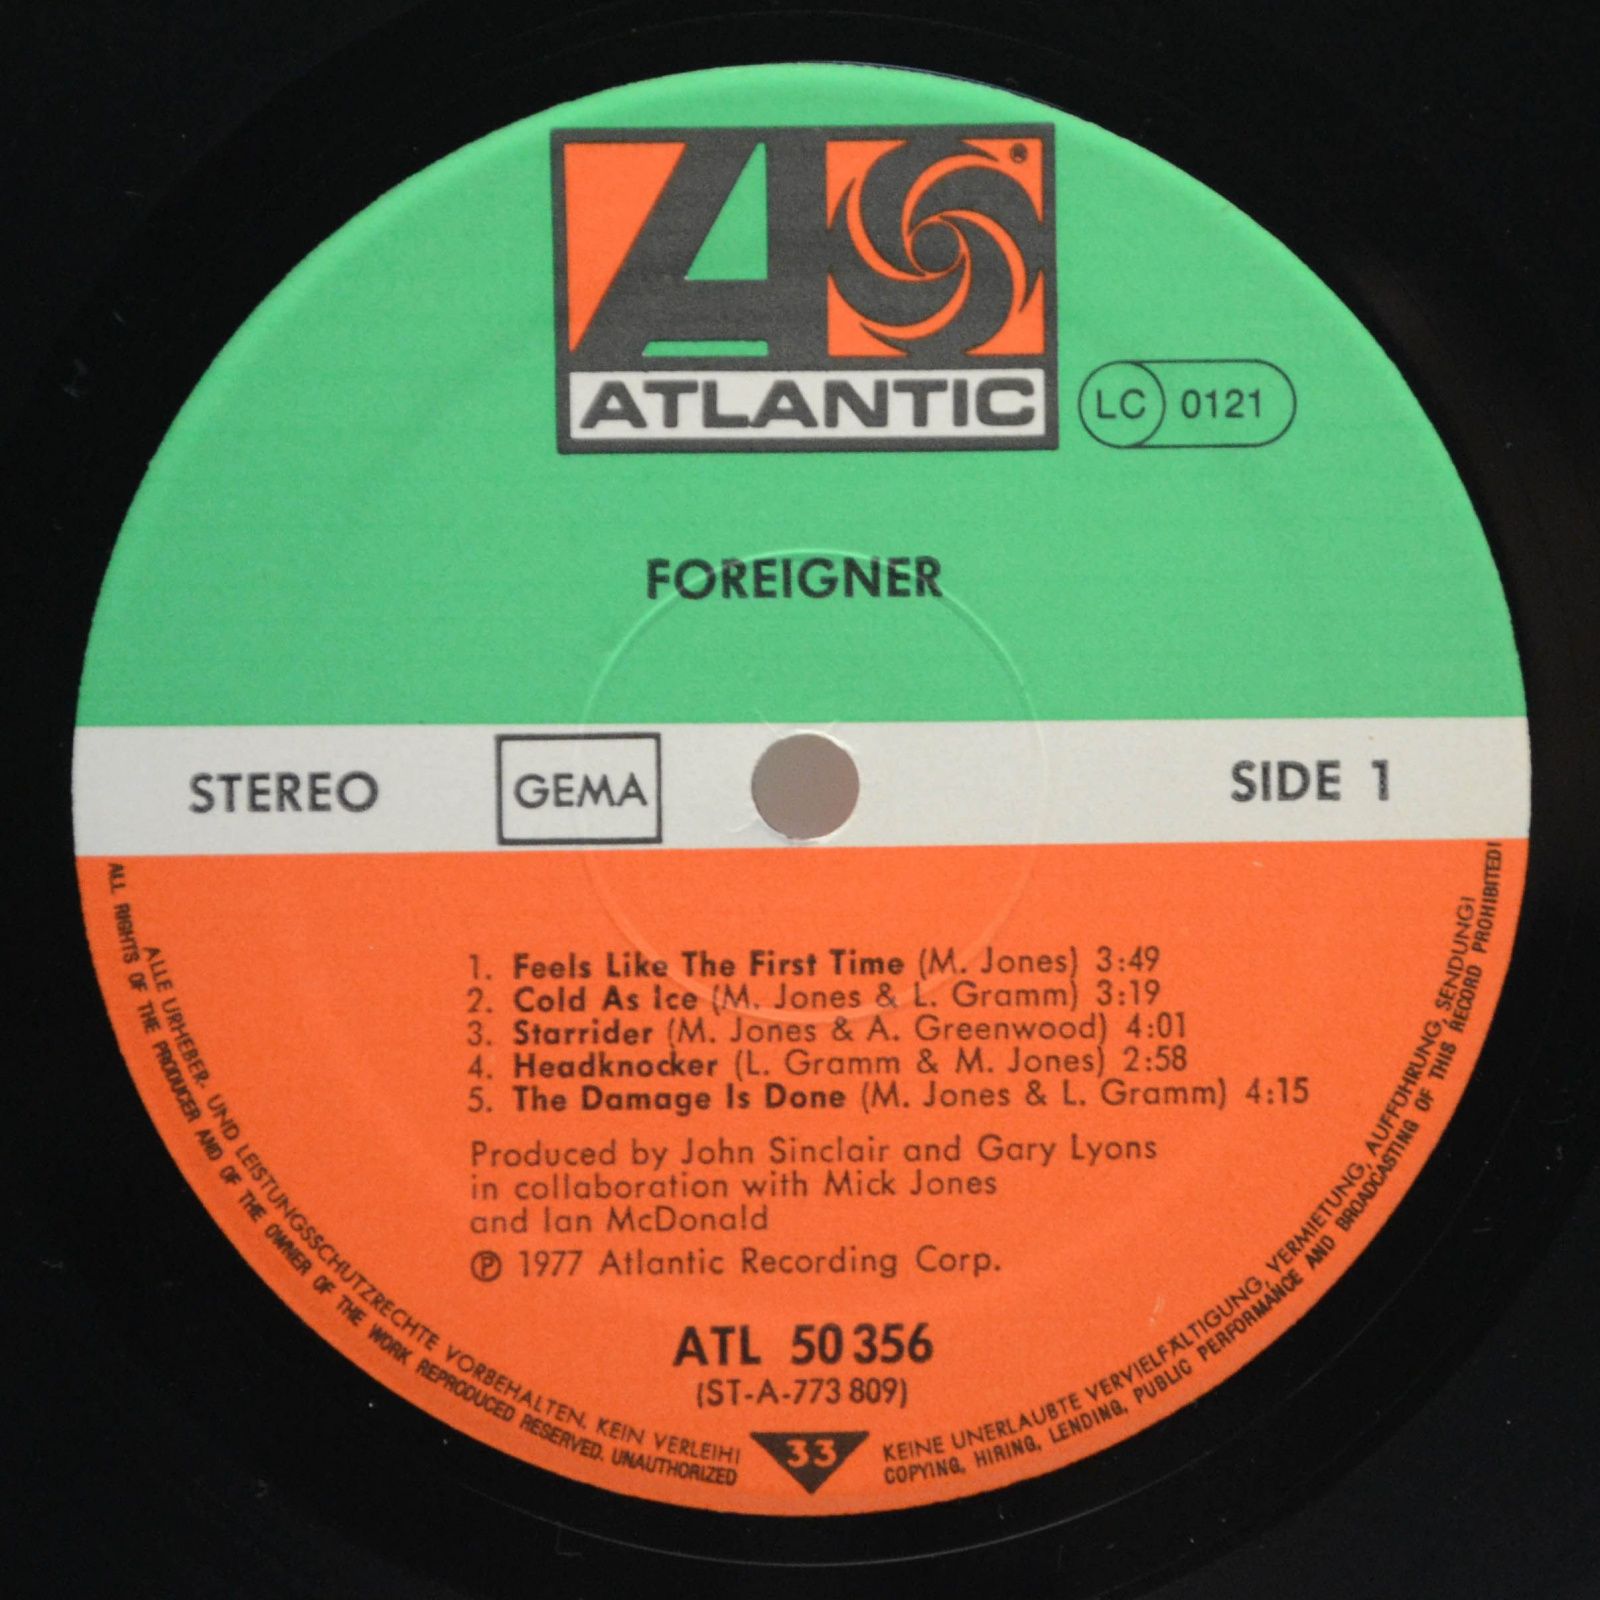 Foreigner — Foreigner, 1977